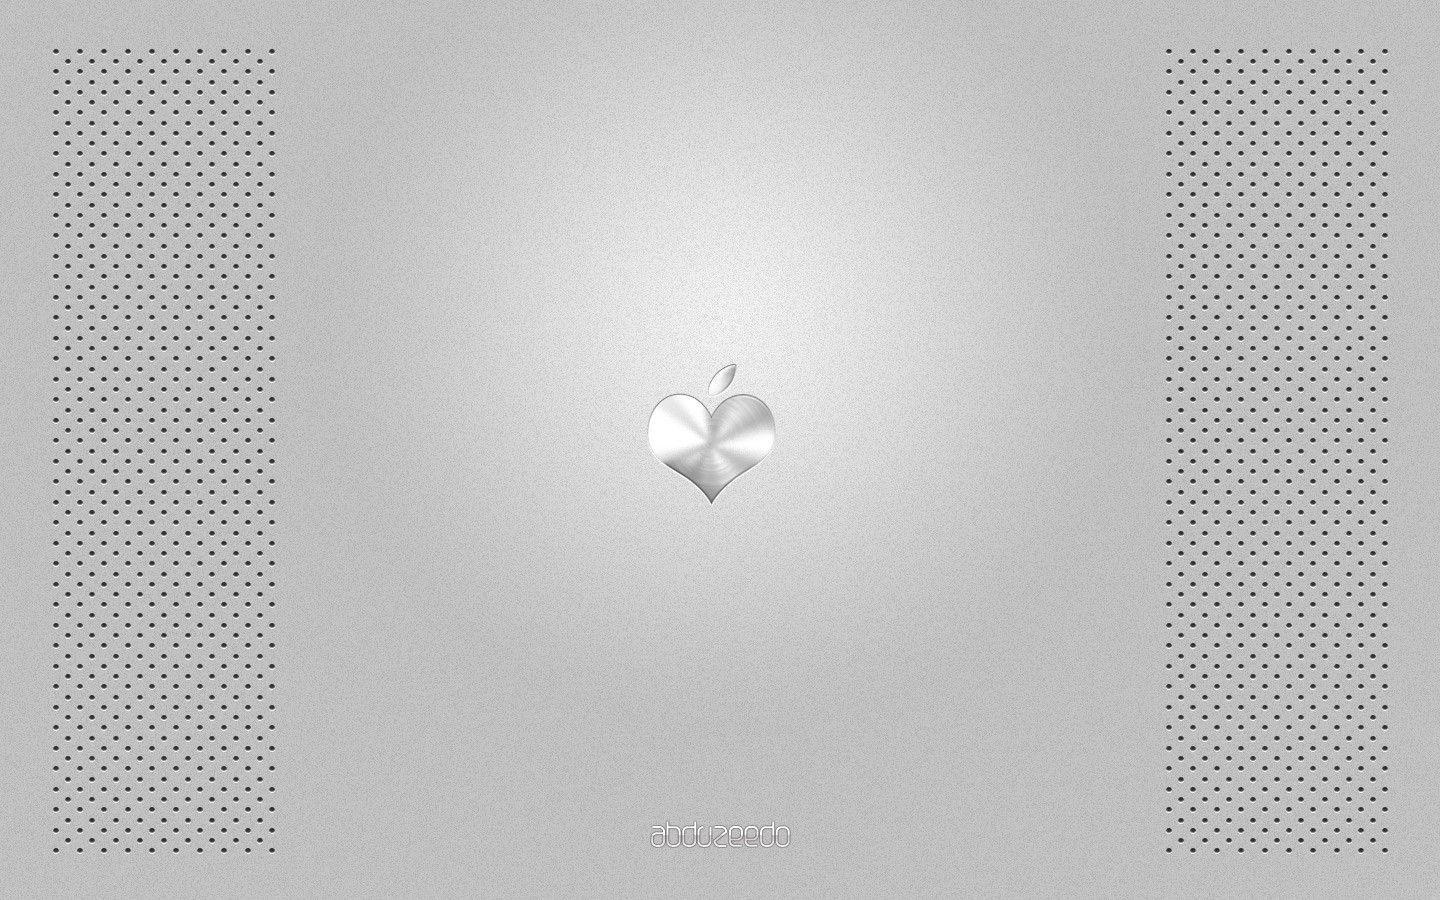 Apple Brushed Aluminum Photohop Tutorial. Abduzeedo Design